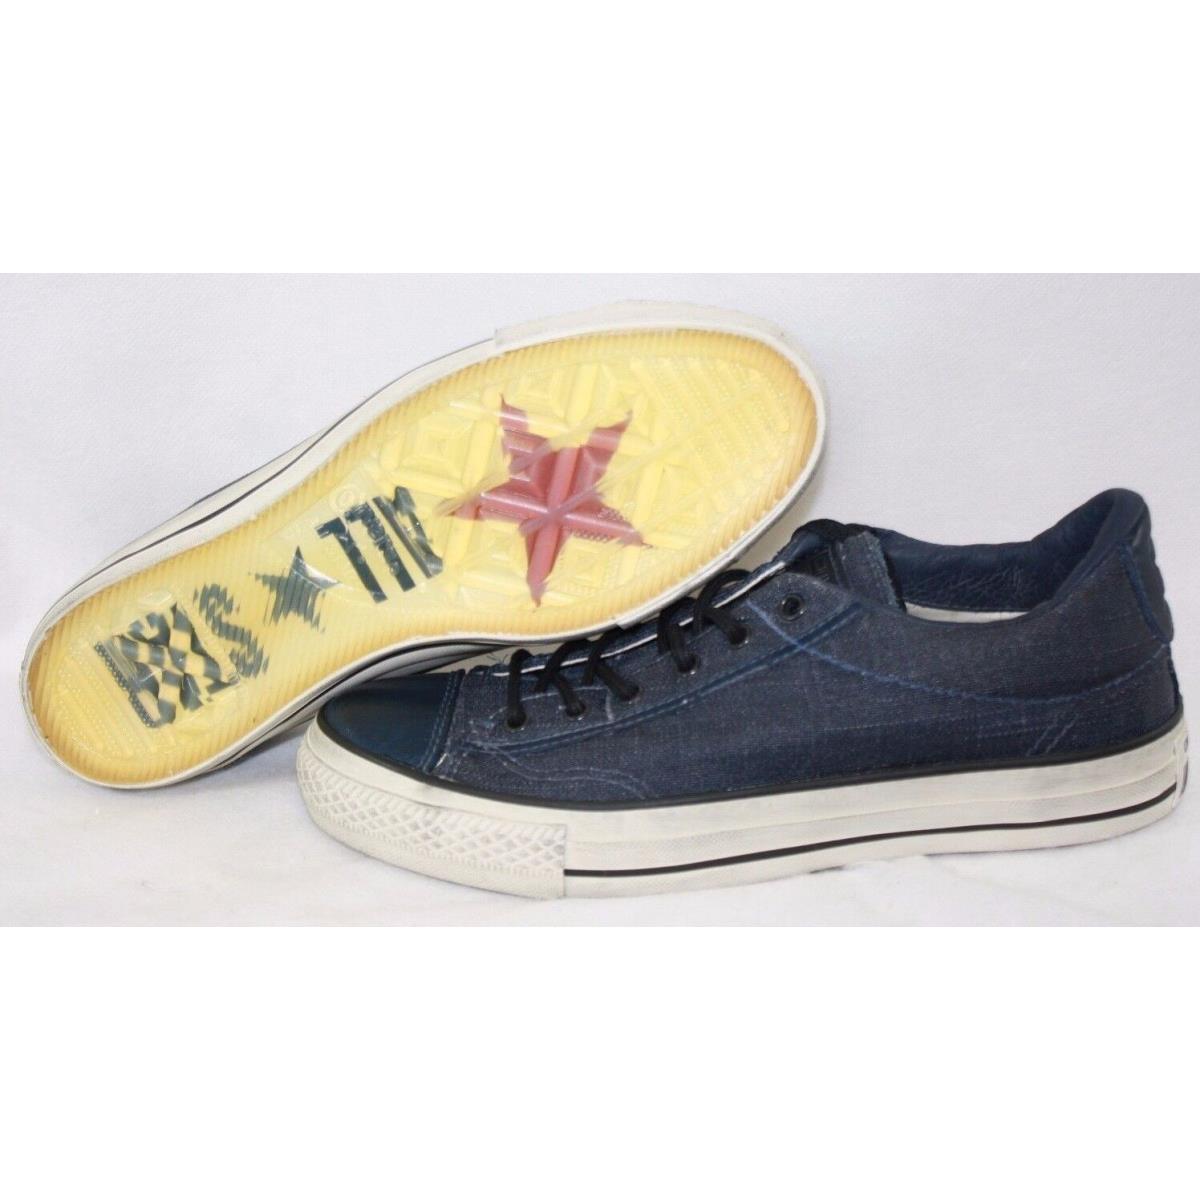 Mens Converse 150181C John Varvatos All Star CT Vintage Slip Sneakers Shoes